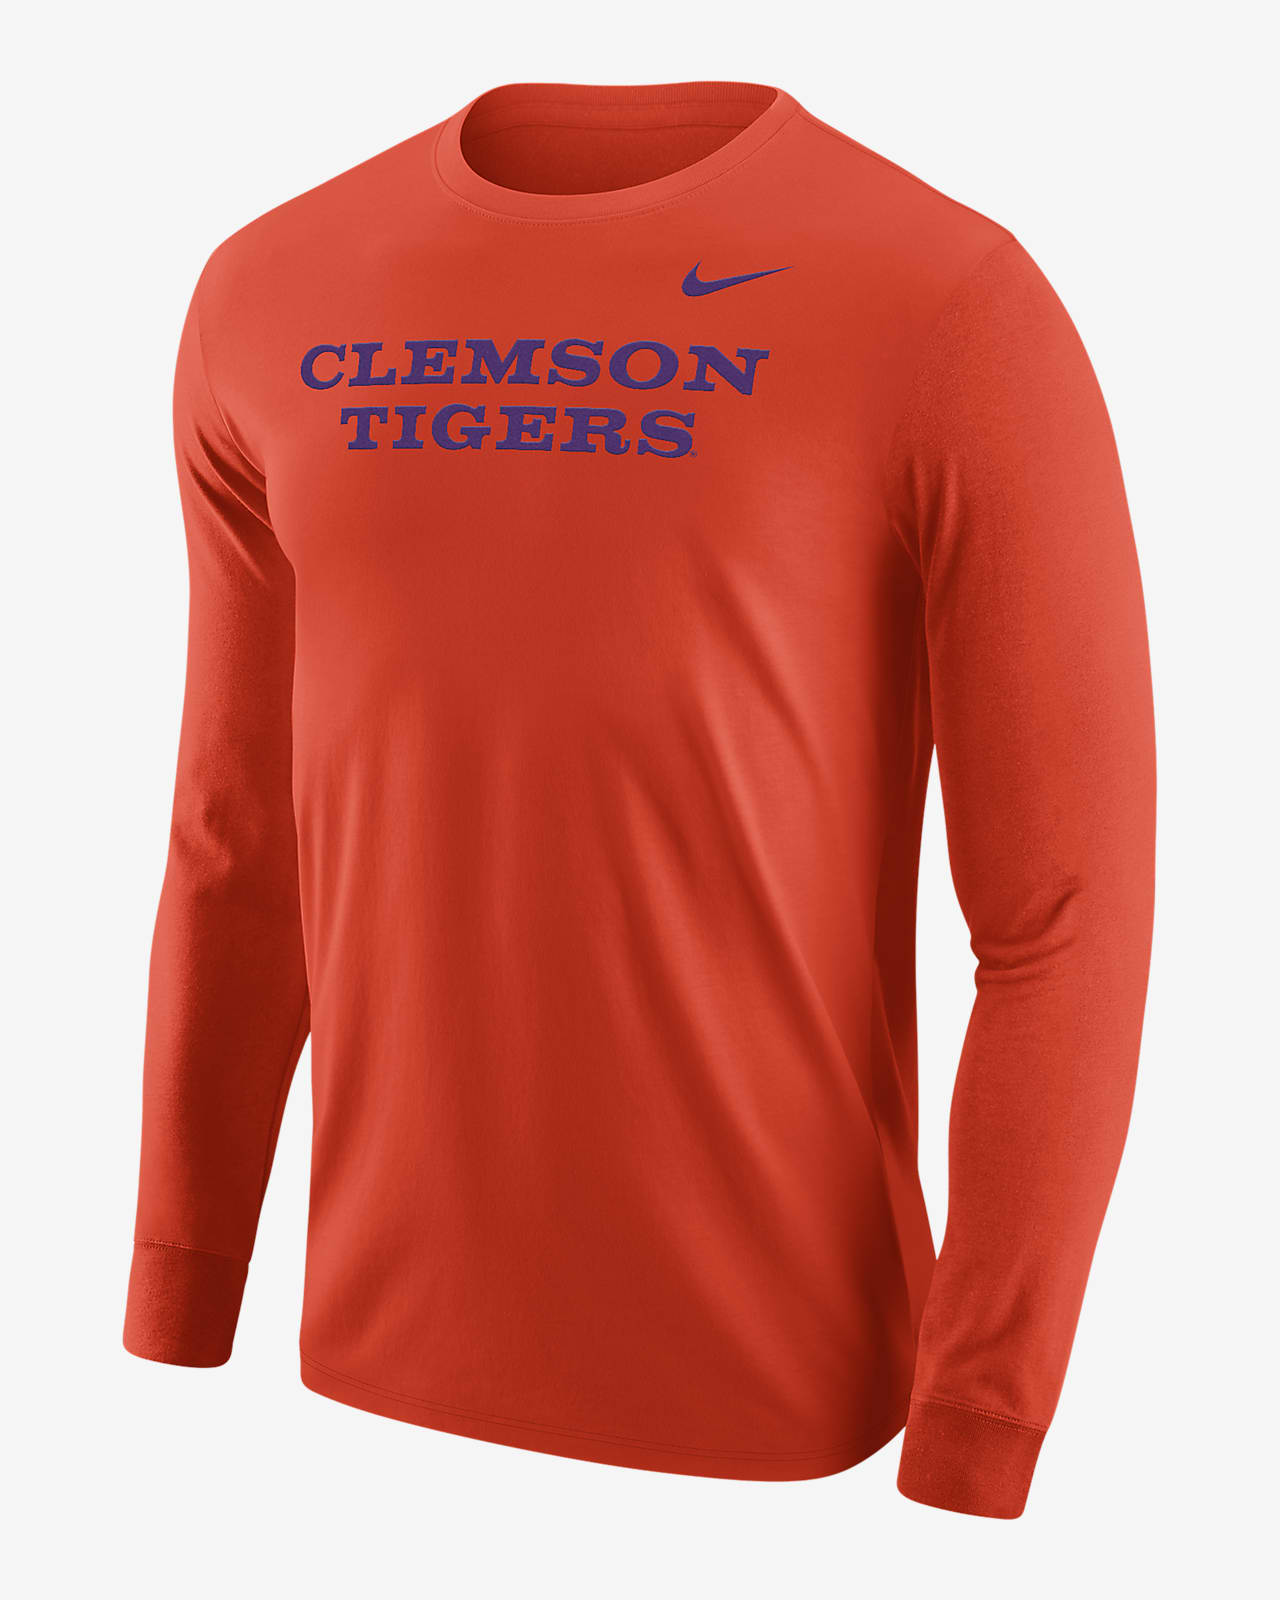 Clemson Men's Nike College Long-Sleeve T-Shirt